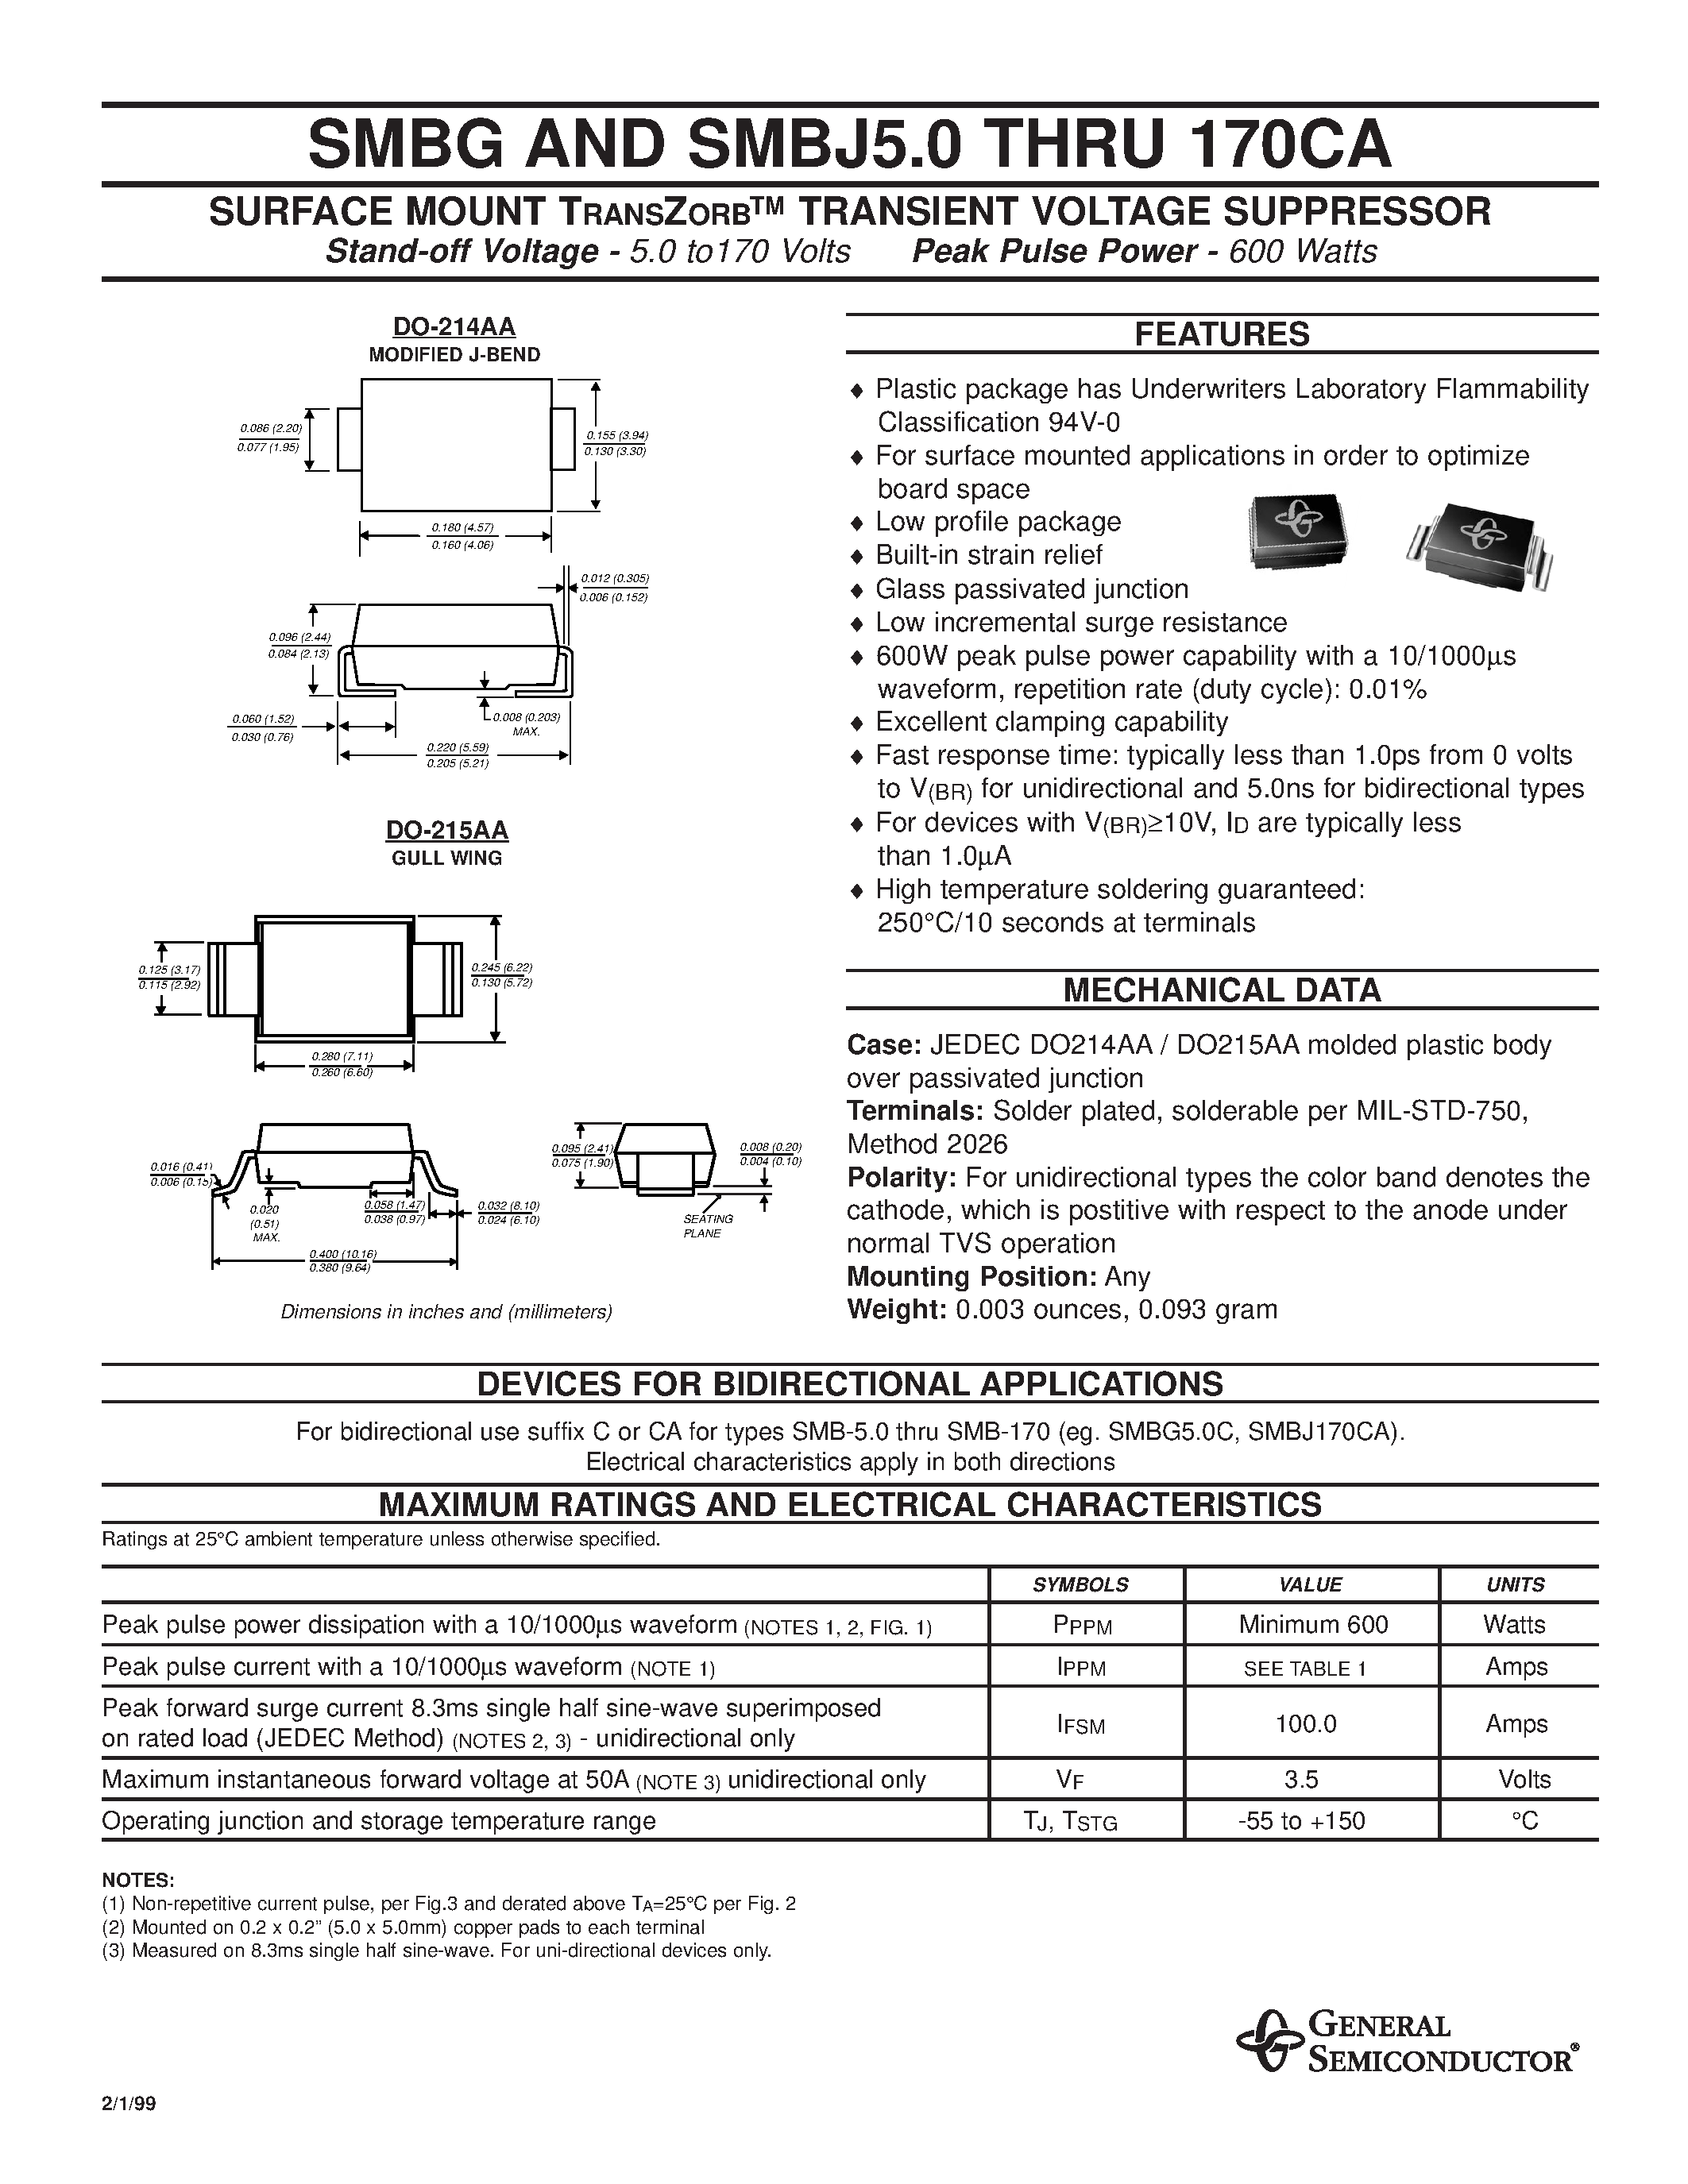 Даташит SMBJ36A - Transient Voltage Suppressors SMBJ5V0(C)A - SMBJ170(C)A страница 1